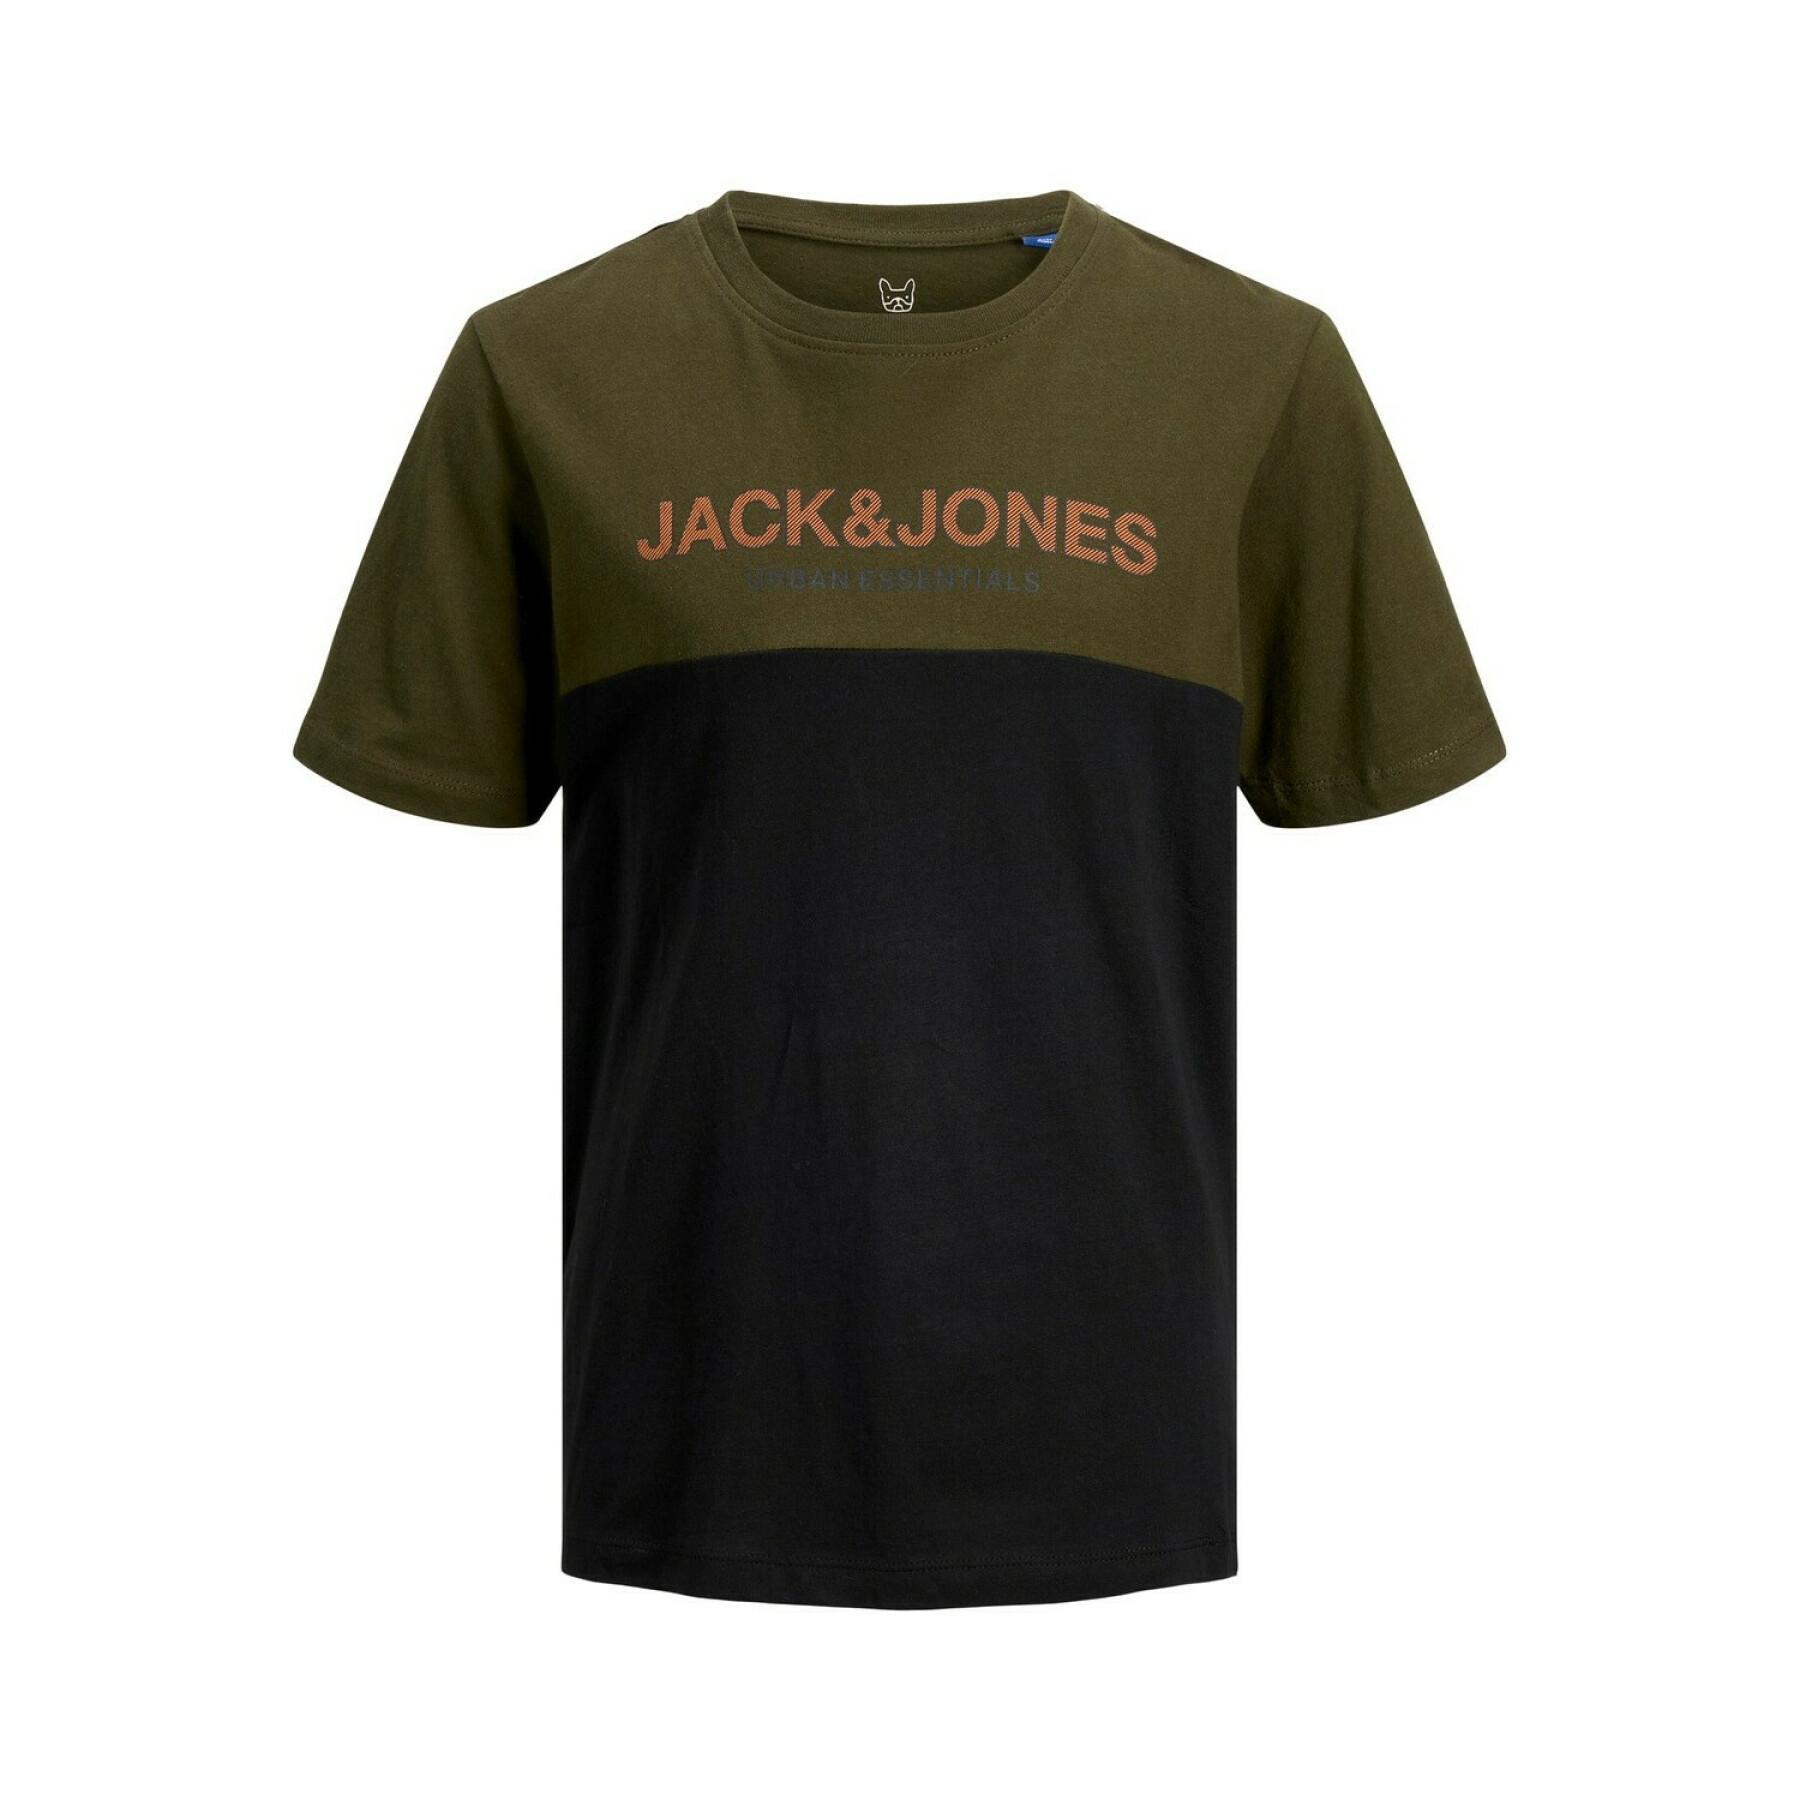 Child's T-shirt Jack & Jones Urban